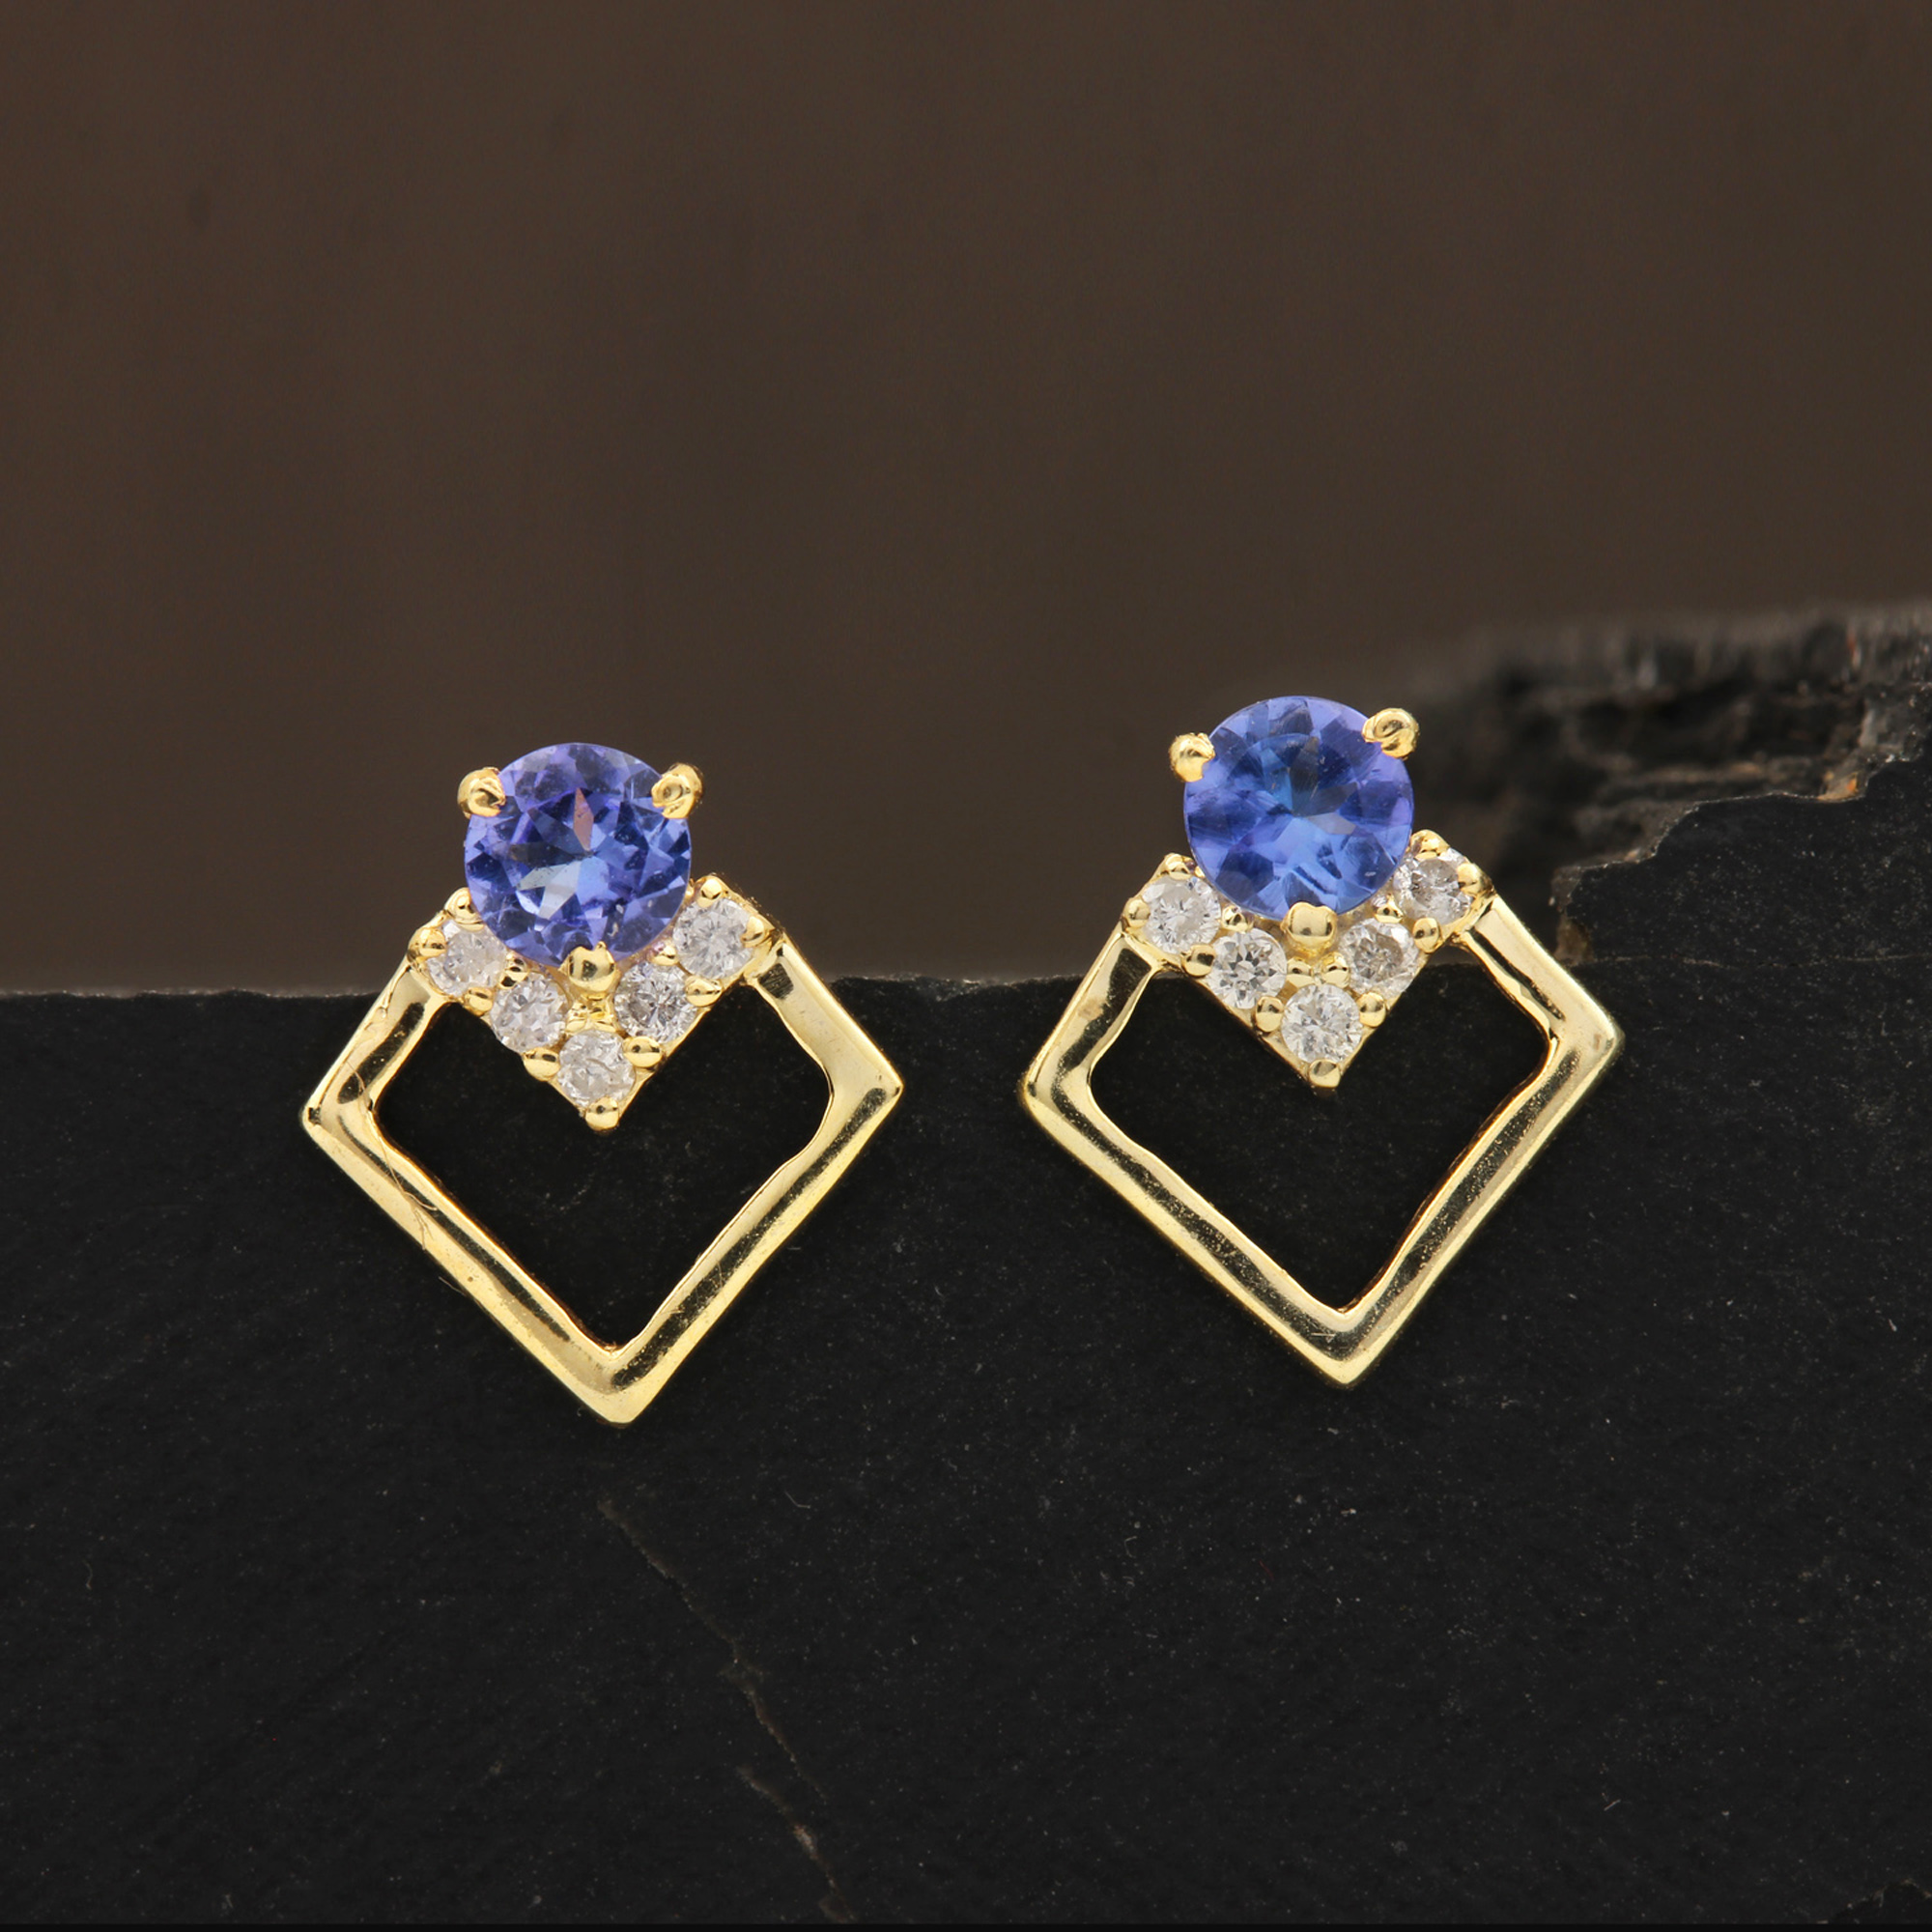 14k Solid Gold Stud Earrings Adorned With Diamond & Tanzanite Gemstone